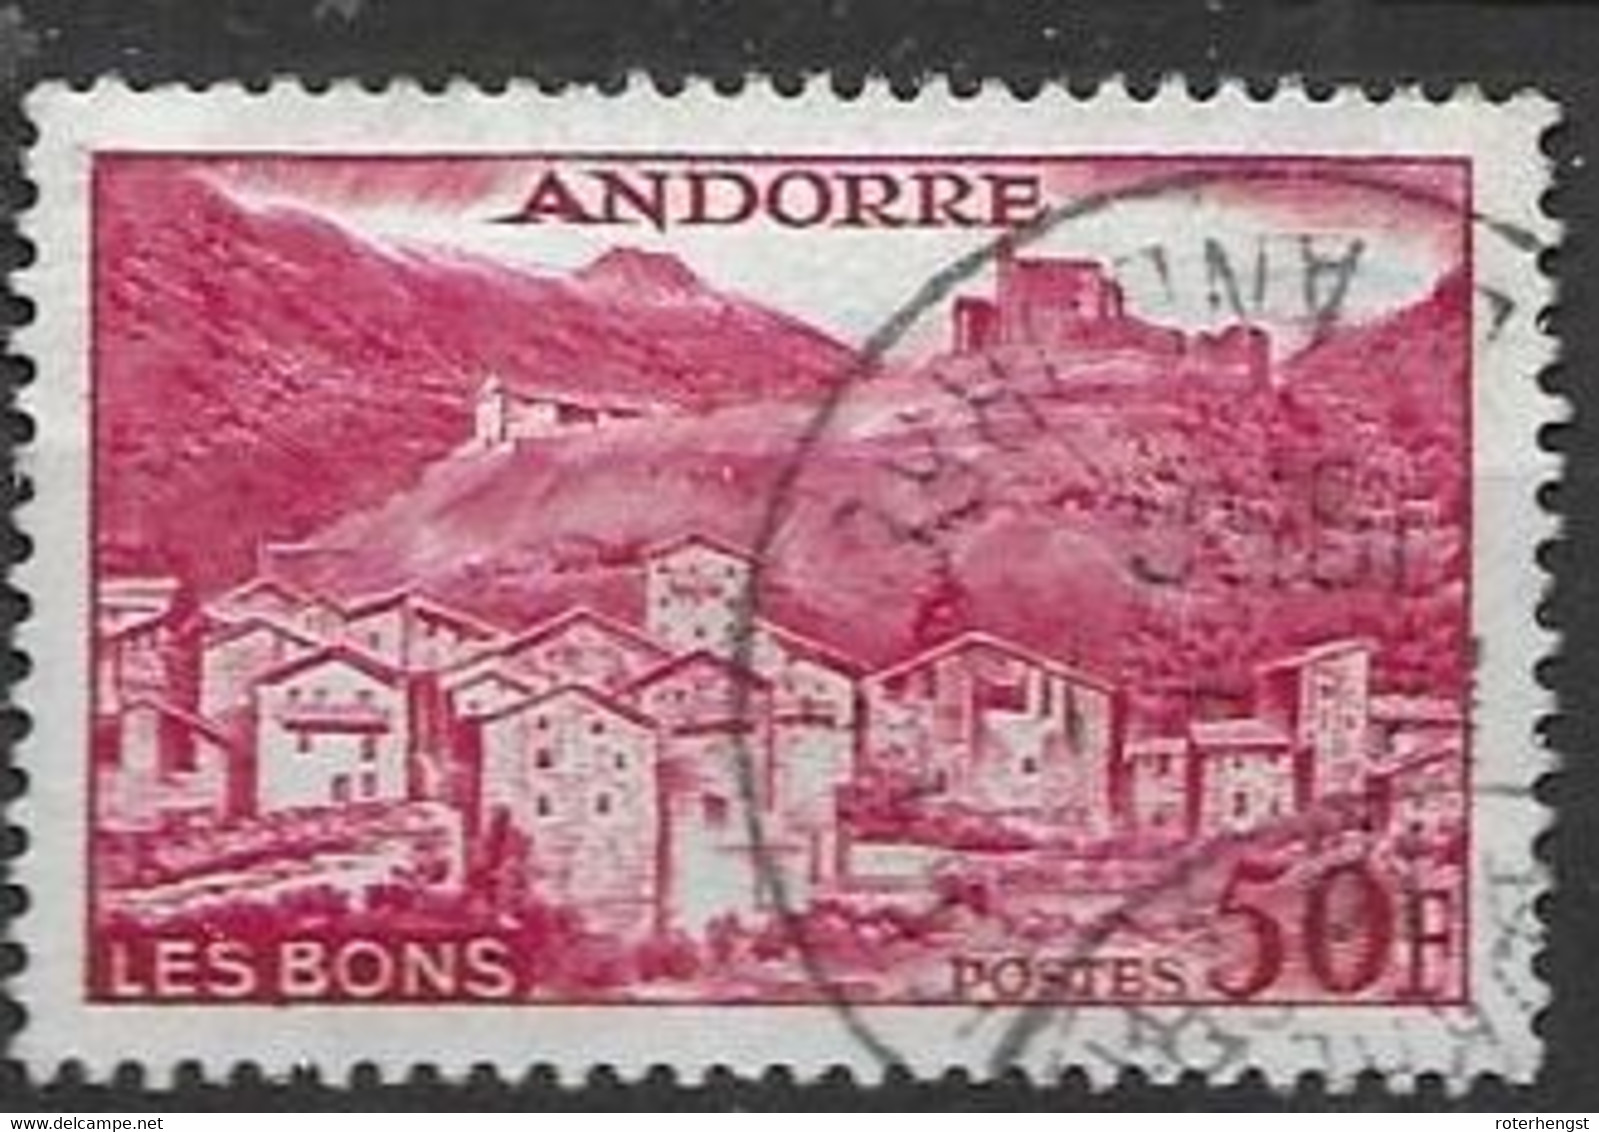 Andorre VFU 1955 3 Euros - Oblitérés